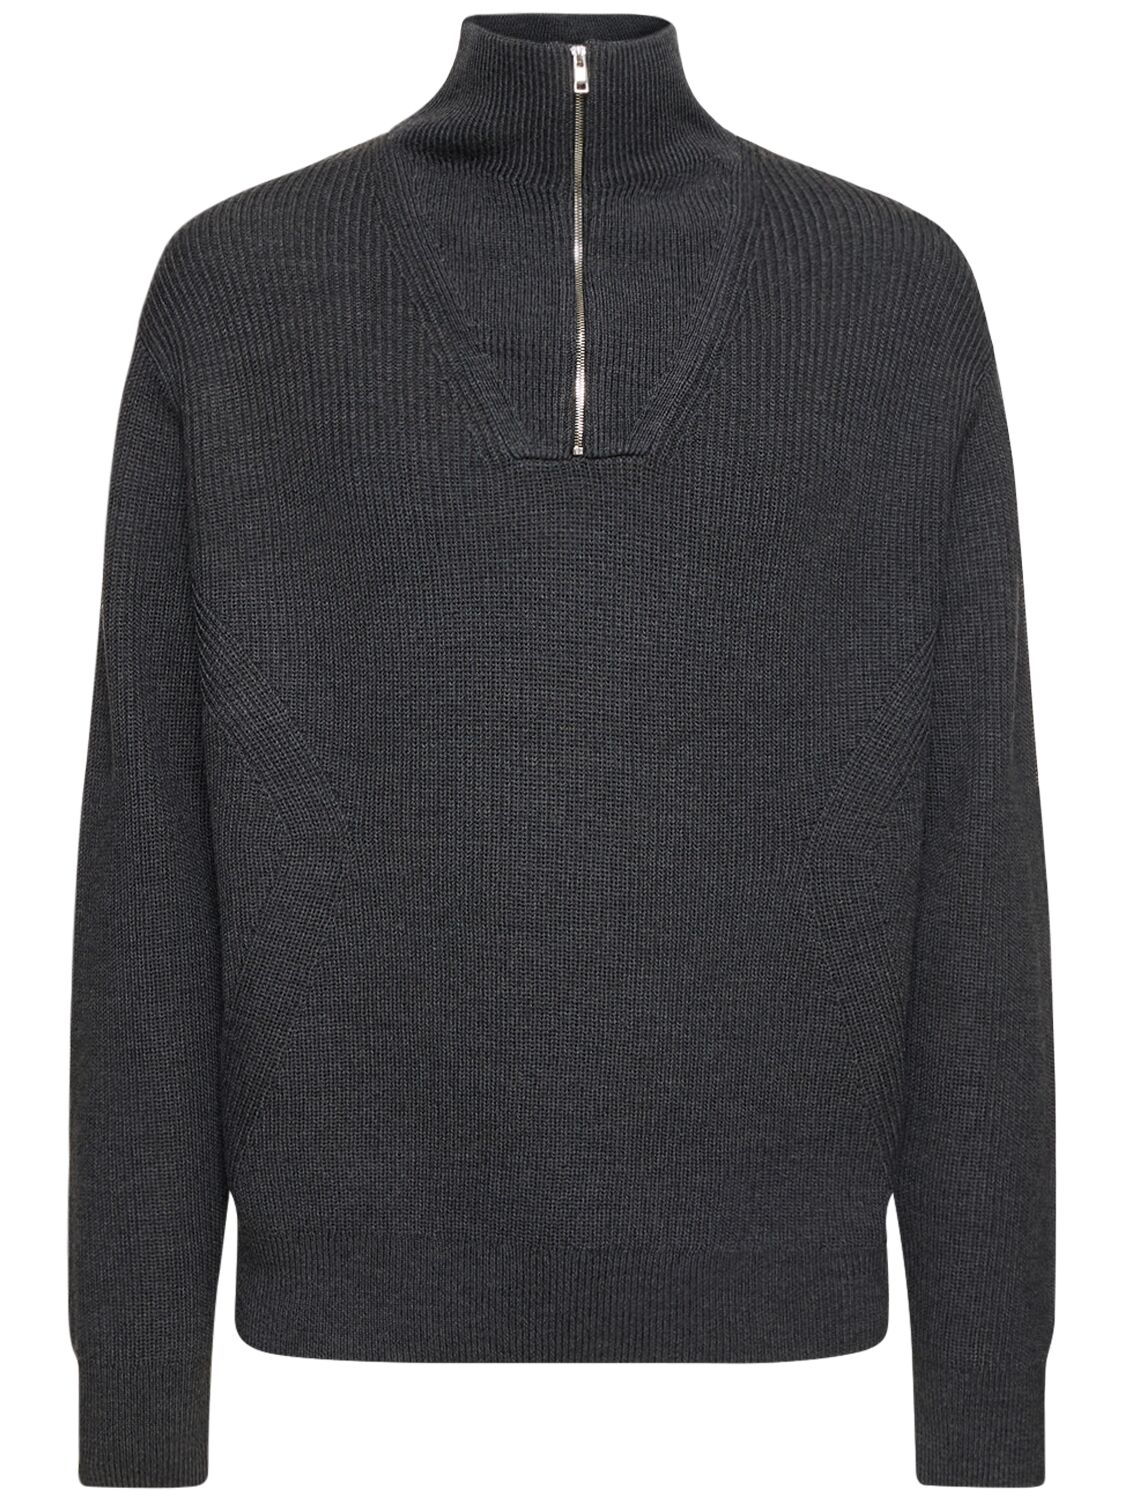 Image of Half-zip Wool Blend Knit Sweater